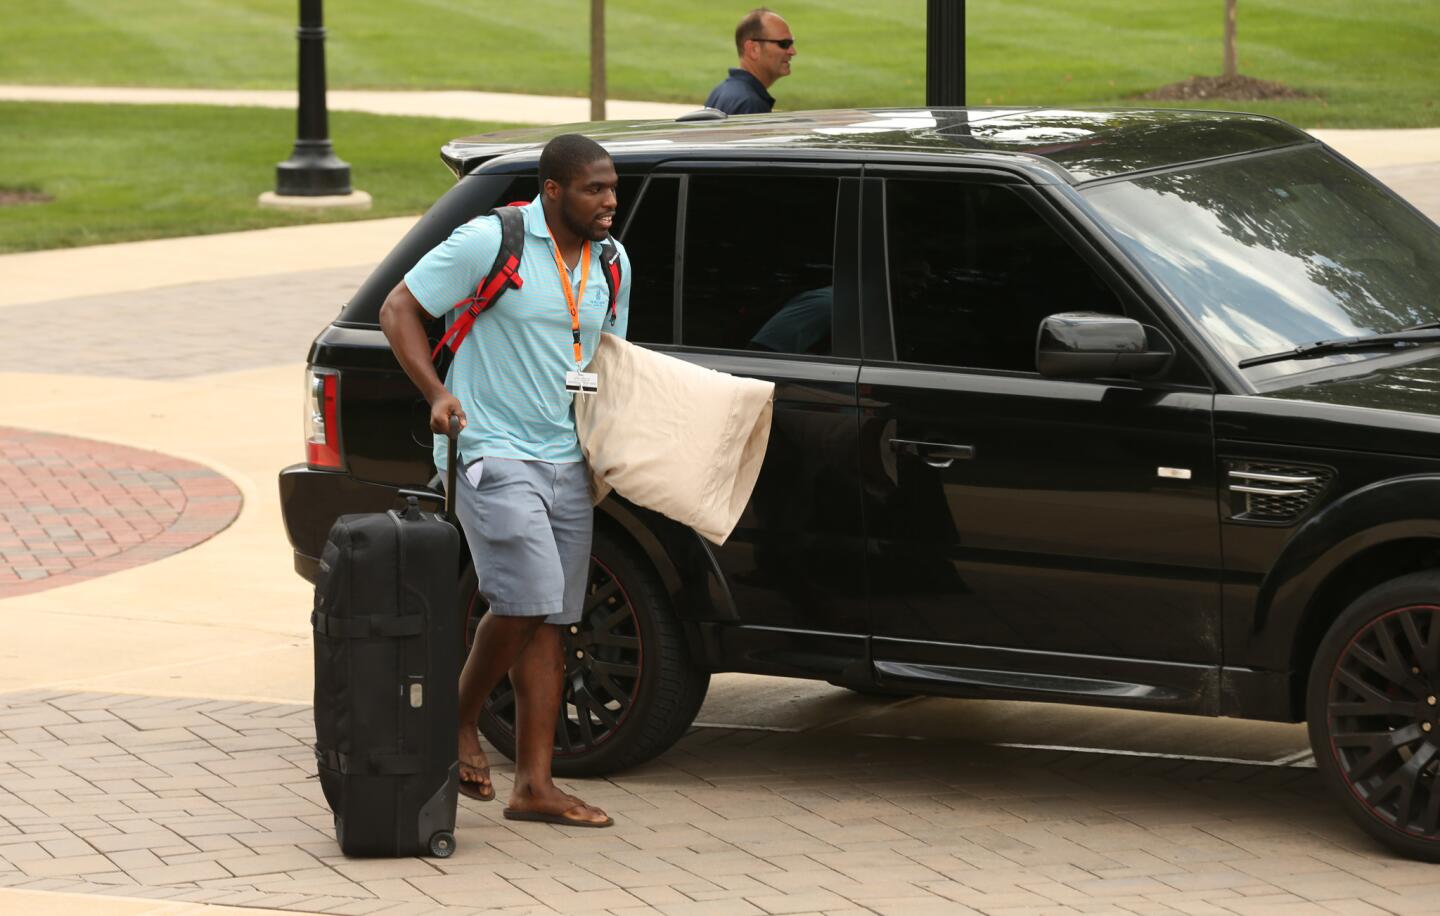 Bears linebacker Sam Acho arrives at training camp on July 29, 2015.